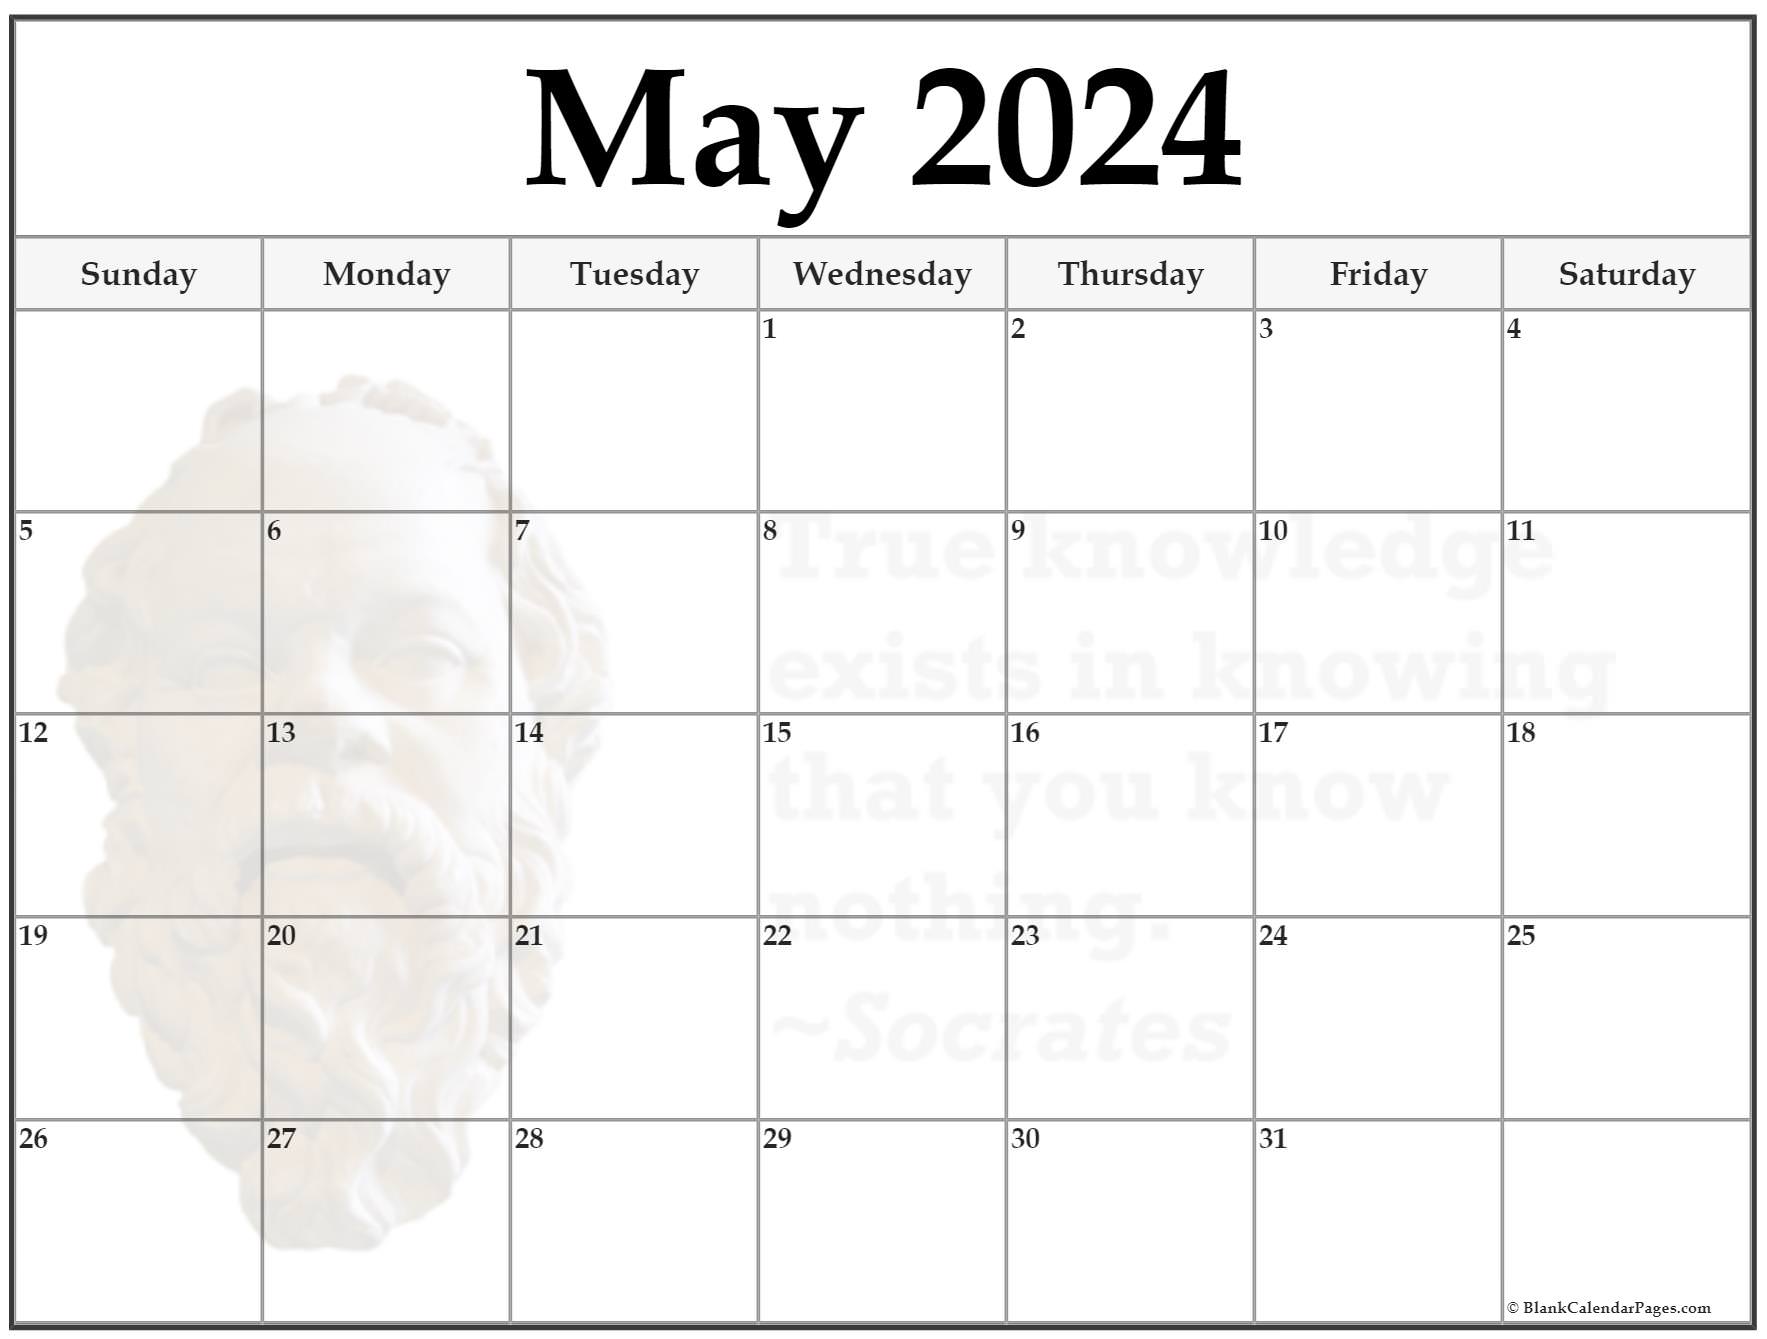 Calendar 2023 Template May 2023 Layout Desk Calendar 2023 Year Wall ...